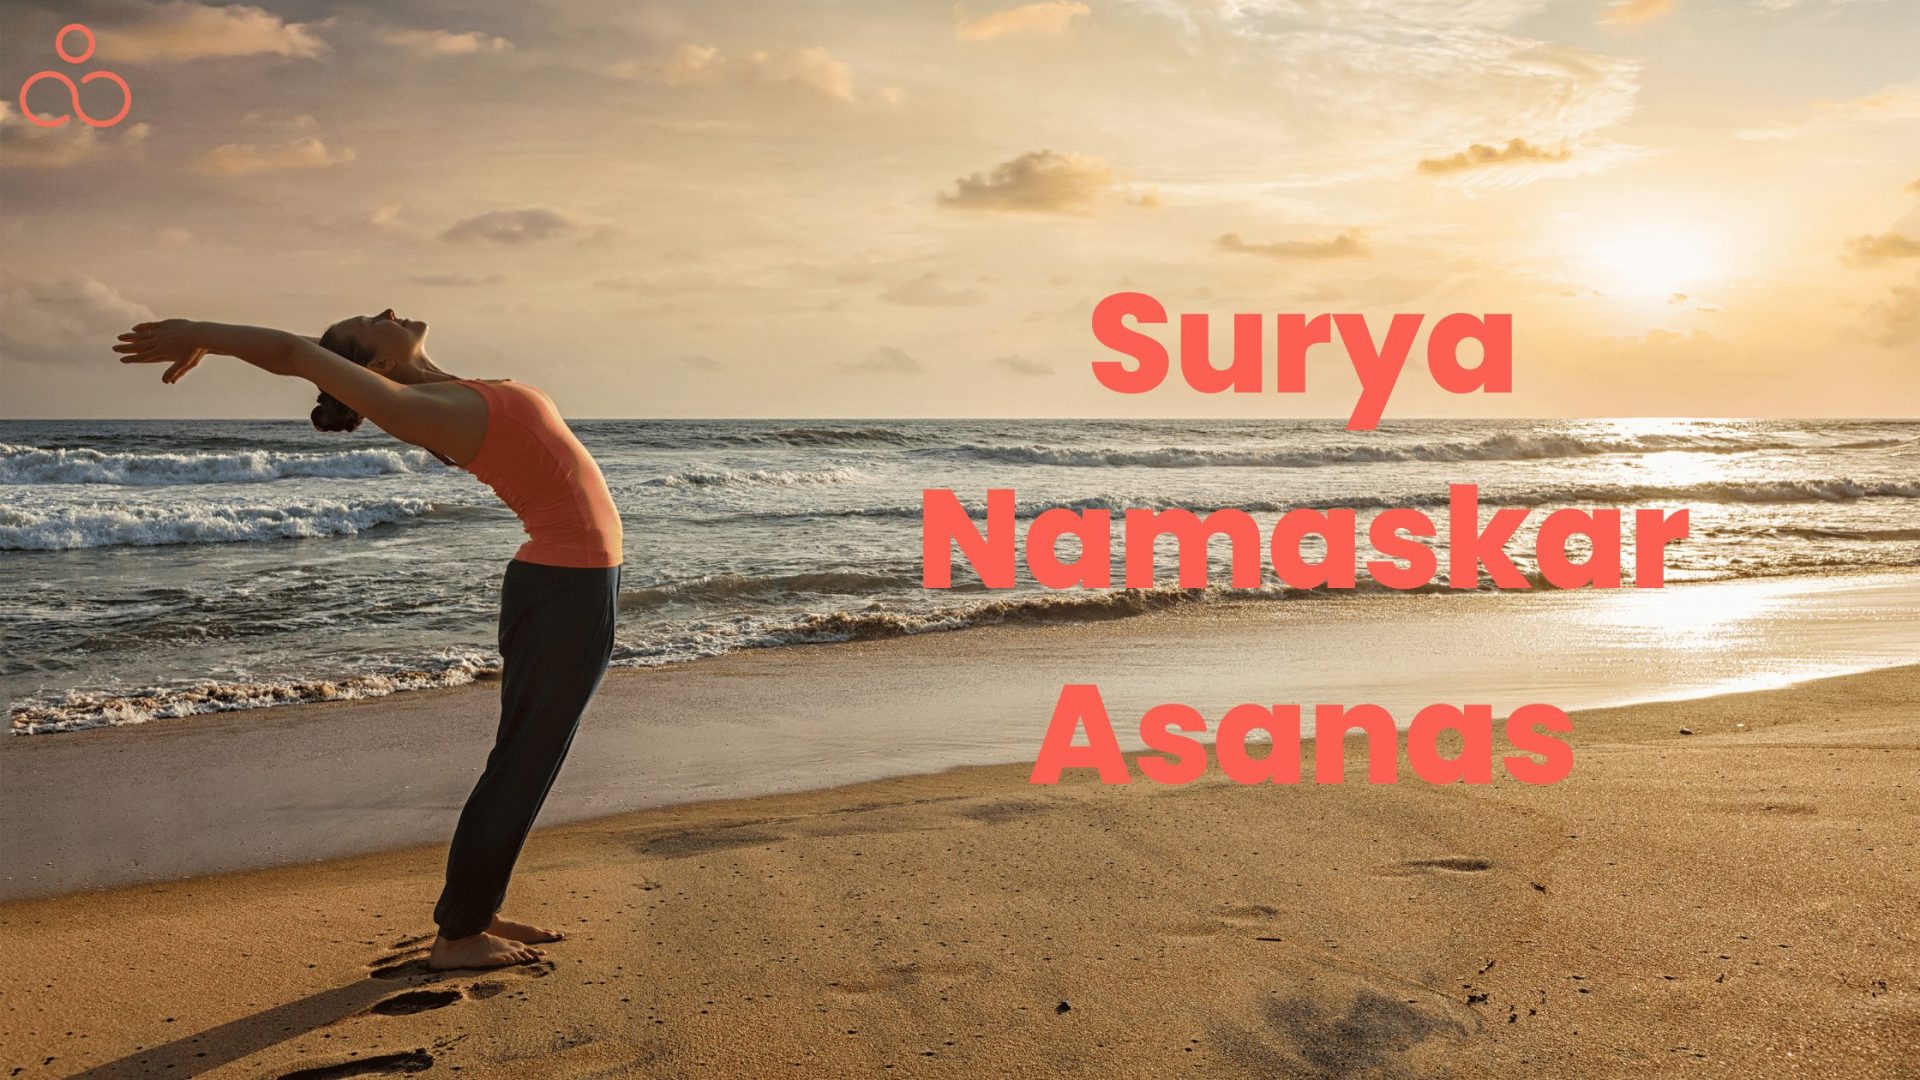 Surya Namaskar Images – Browse 3,192 Stock Photos, Vectors, and Video |  Adobe Stock